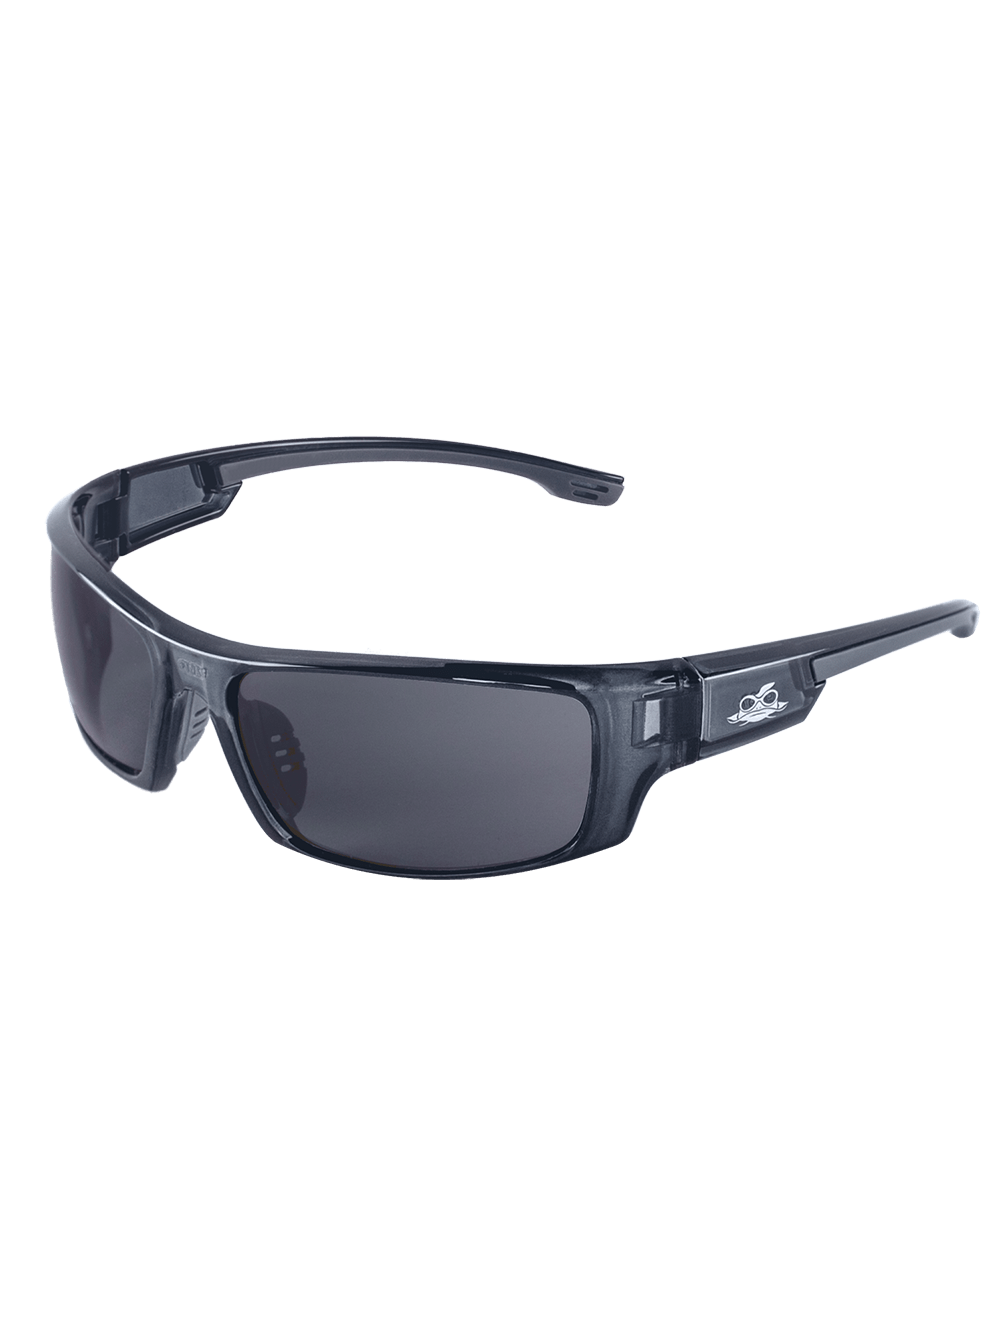 Dorado® Dark Smoke Anti-Fog Lens, Crystal Black Frame Safety Glasses - BH943AF